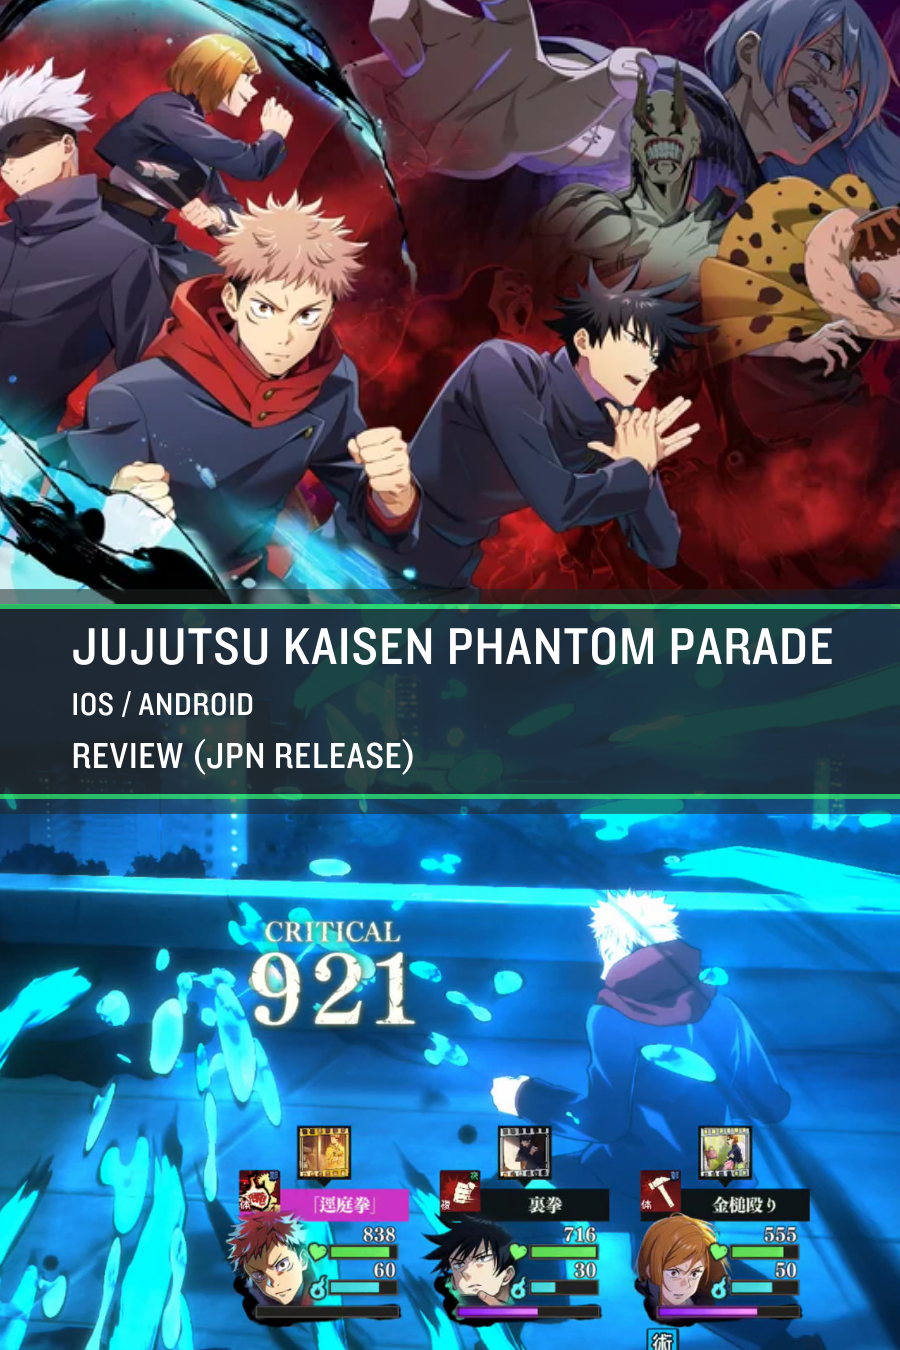 Become A Curse User In Jujutsu Kaisen Phantom Parade - Droid Gamers